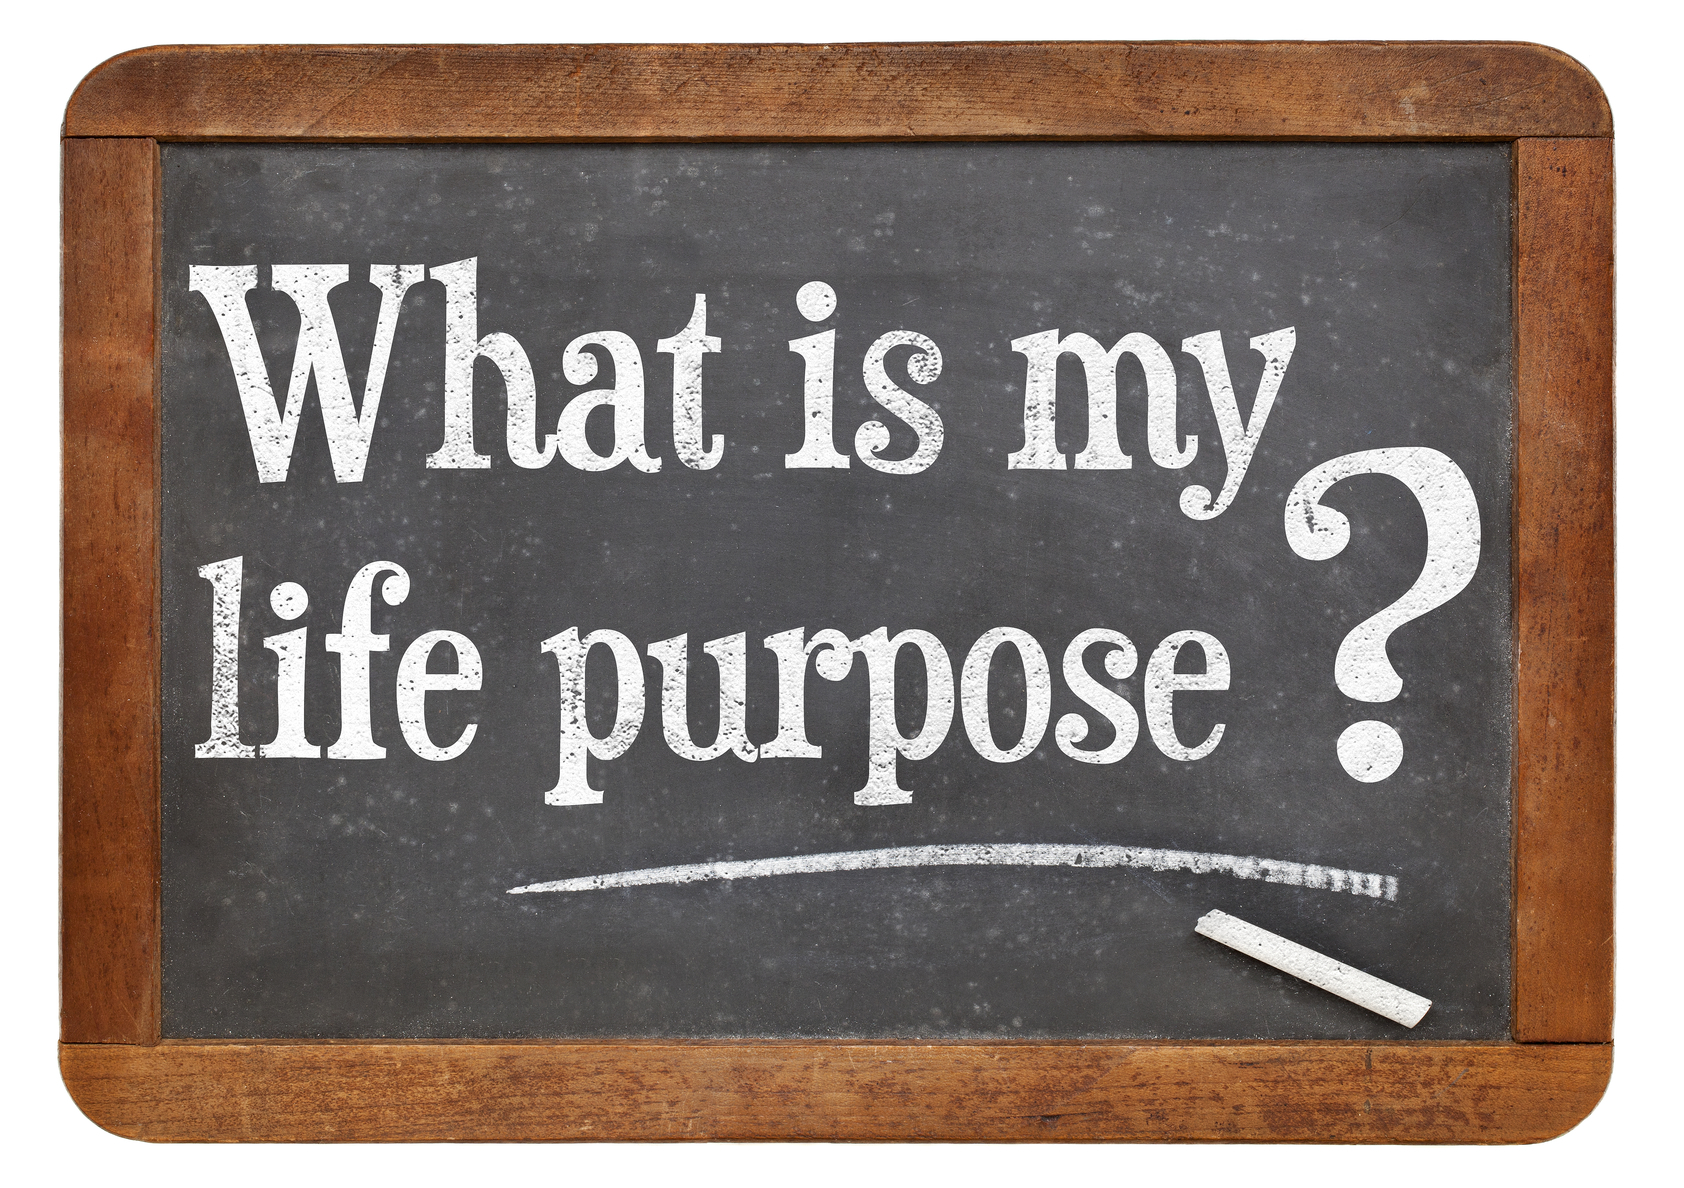 Purpose of life is. Life purpose. My purpose in Life. On purpose. Картинка к слову what.